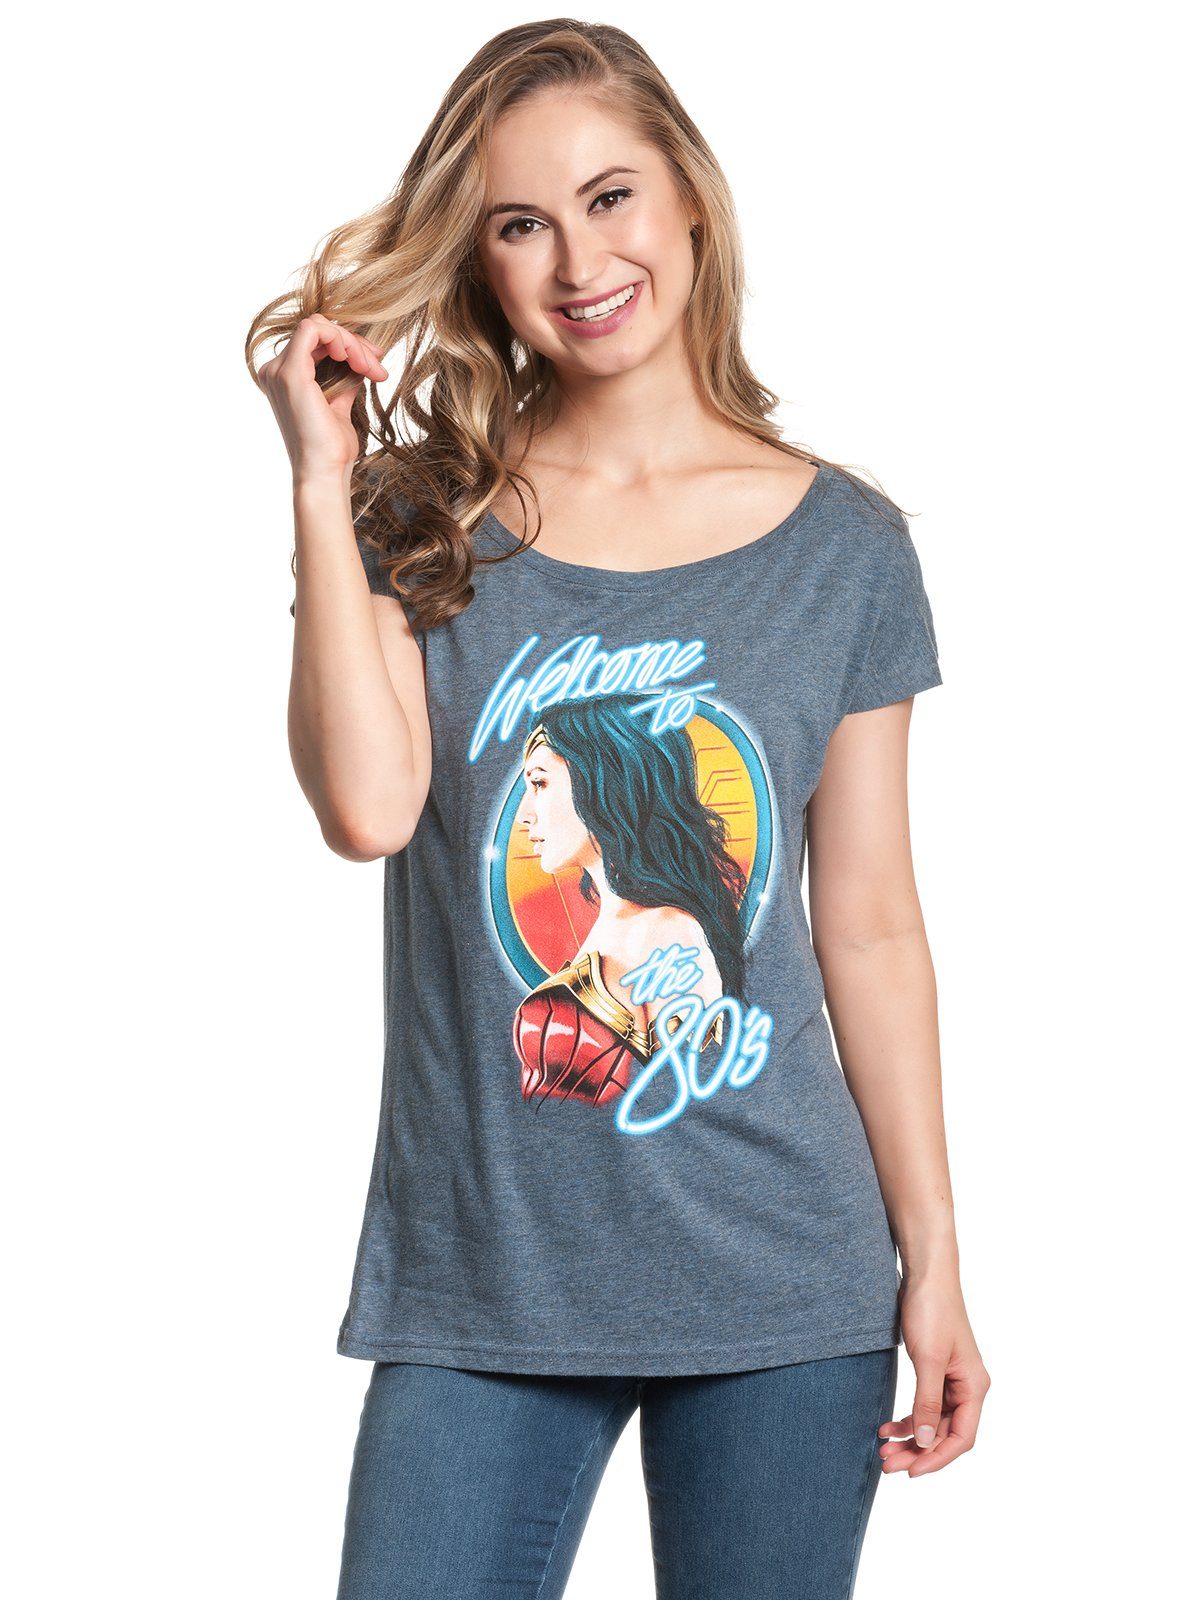 Warner T-Shirt Wonderwoman Welcome To 80's